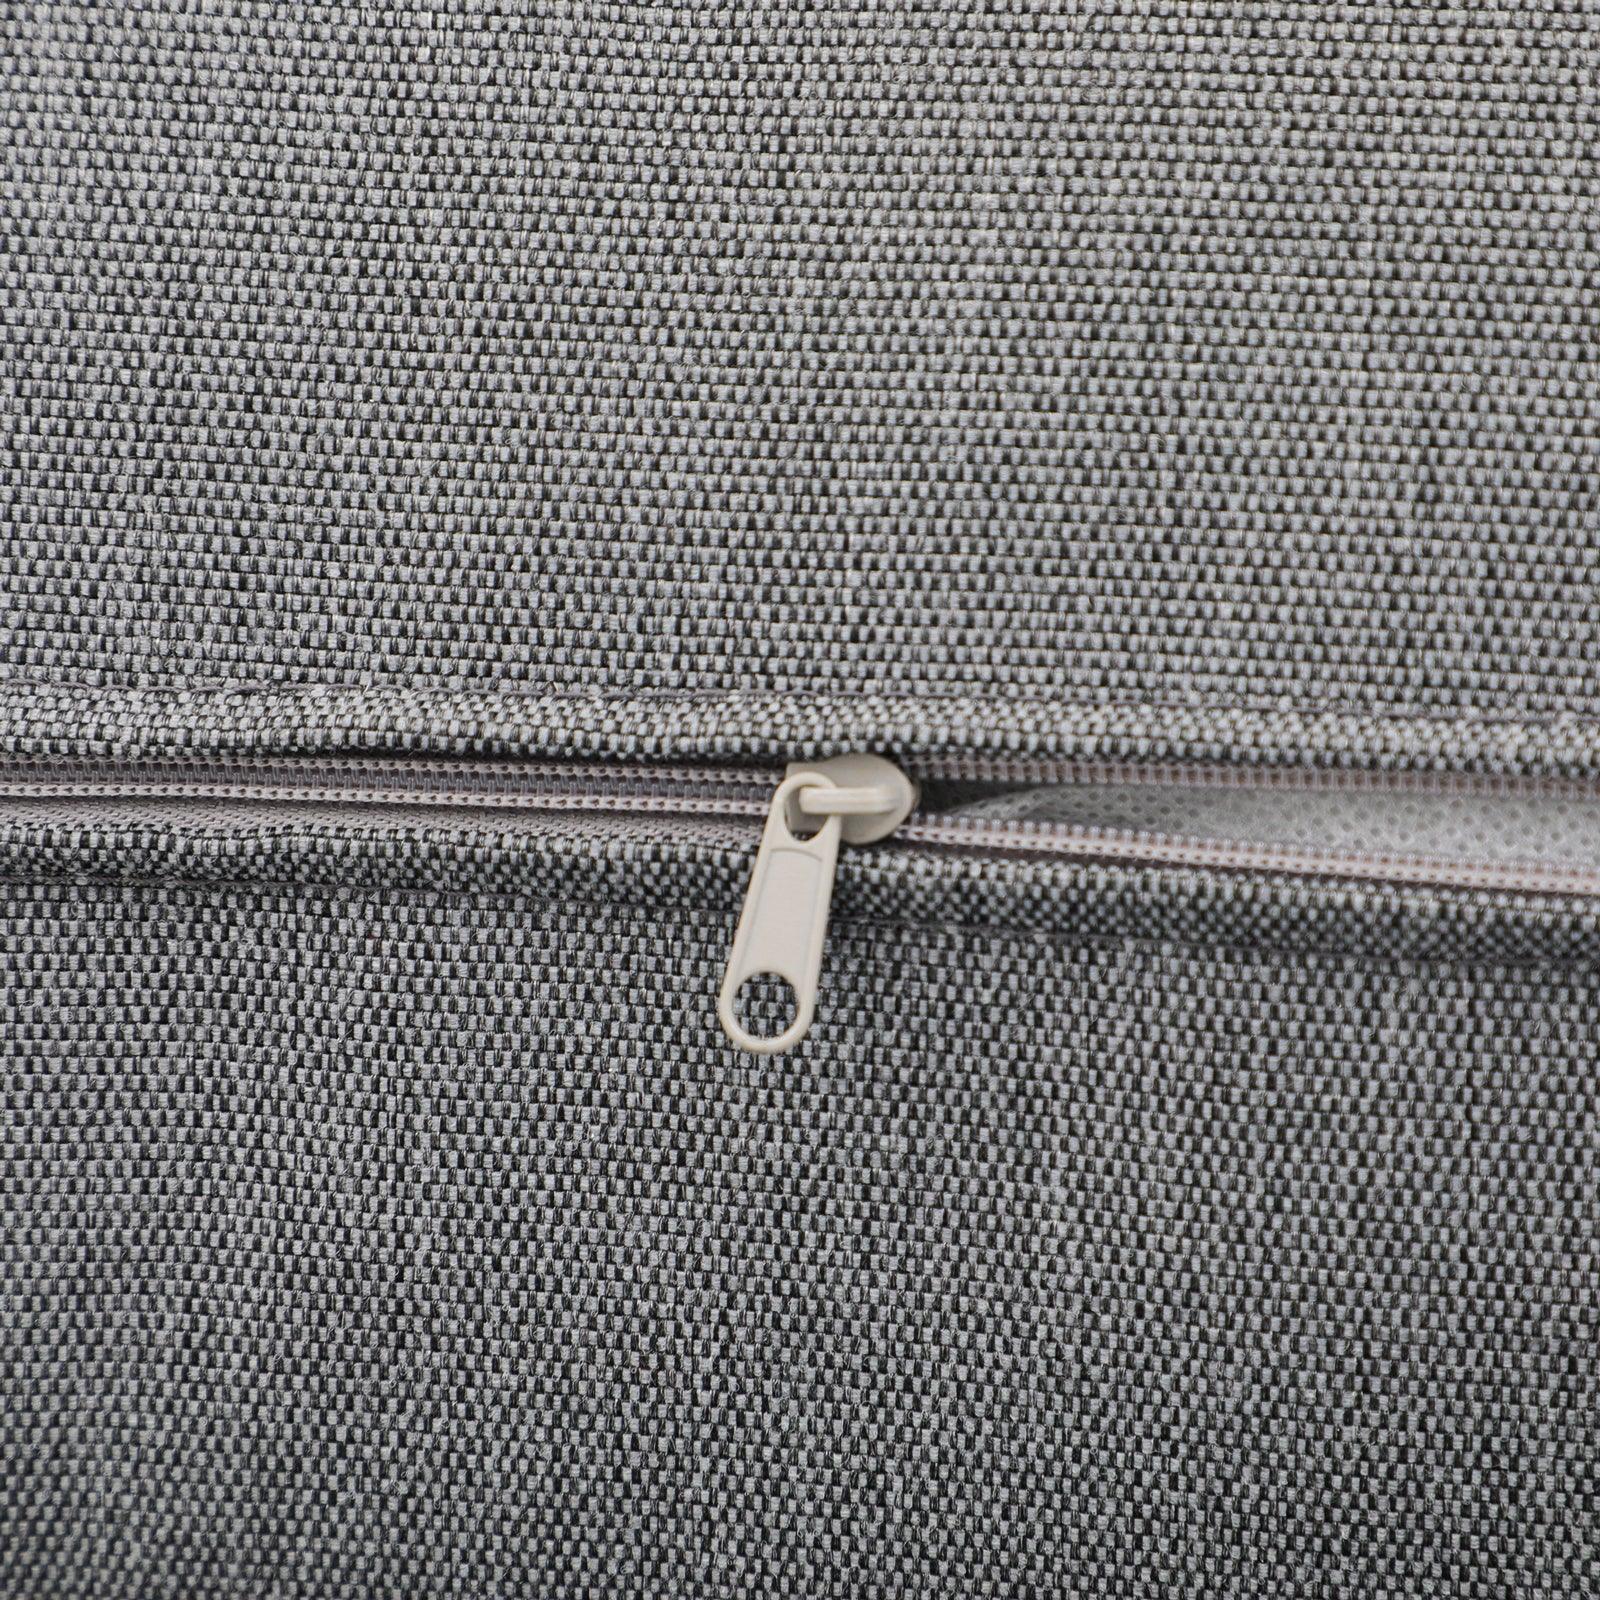 Capri chair cushion detail, zipper - Jardina Furniture